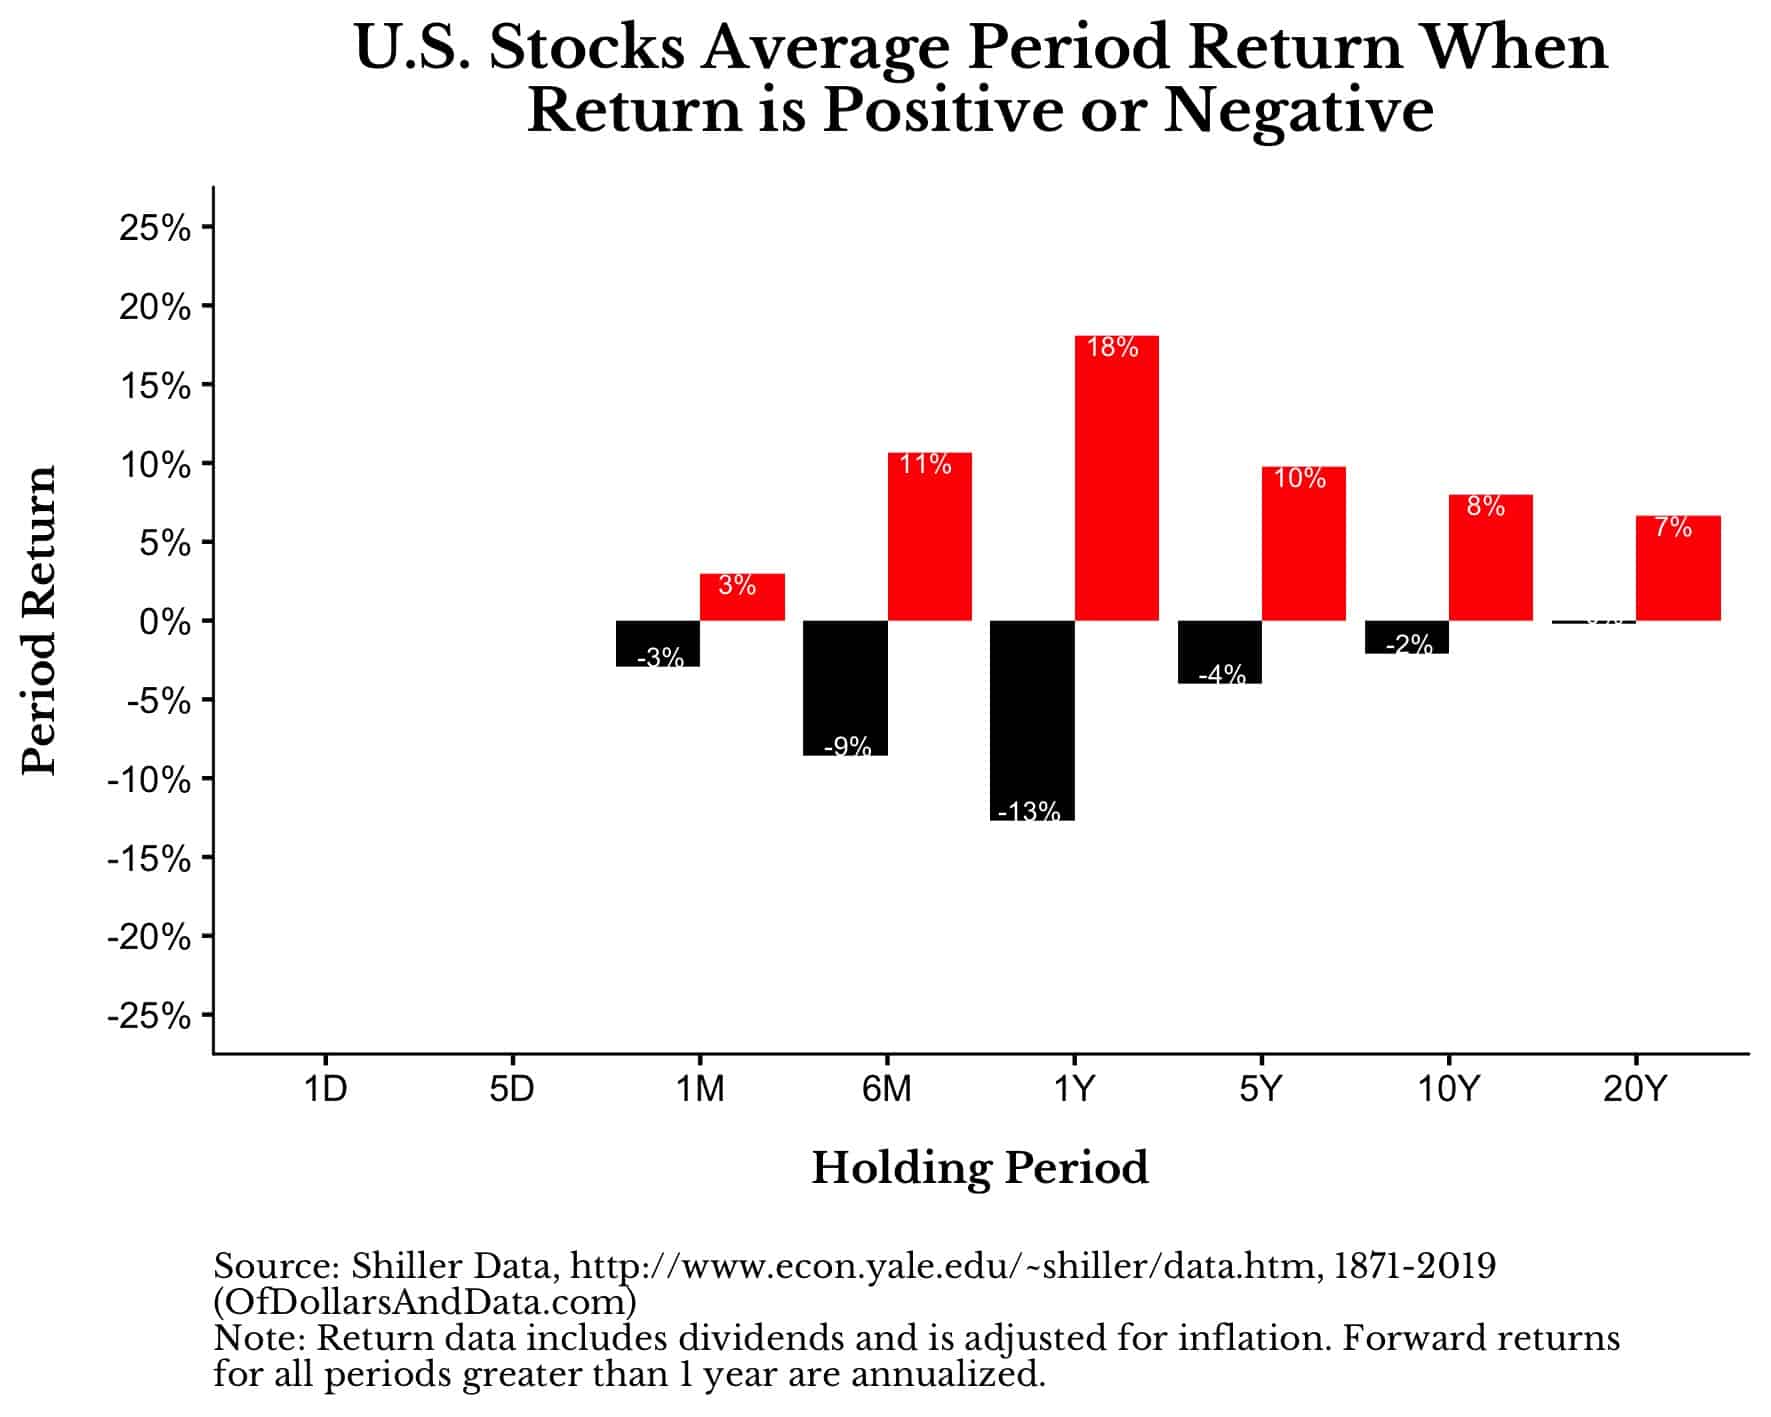 U.S. stocks period return when return is positive or negative